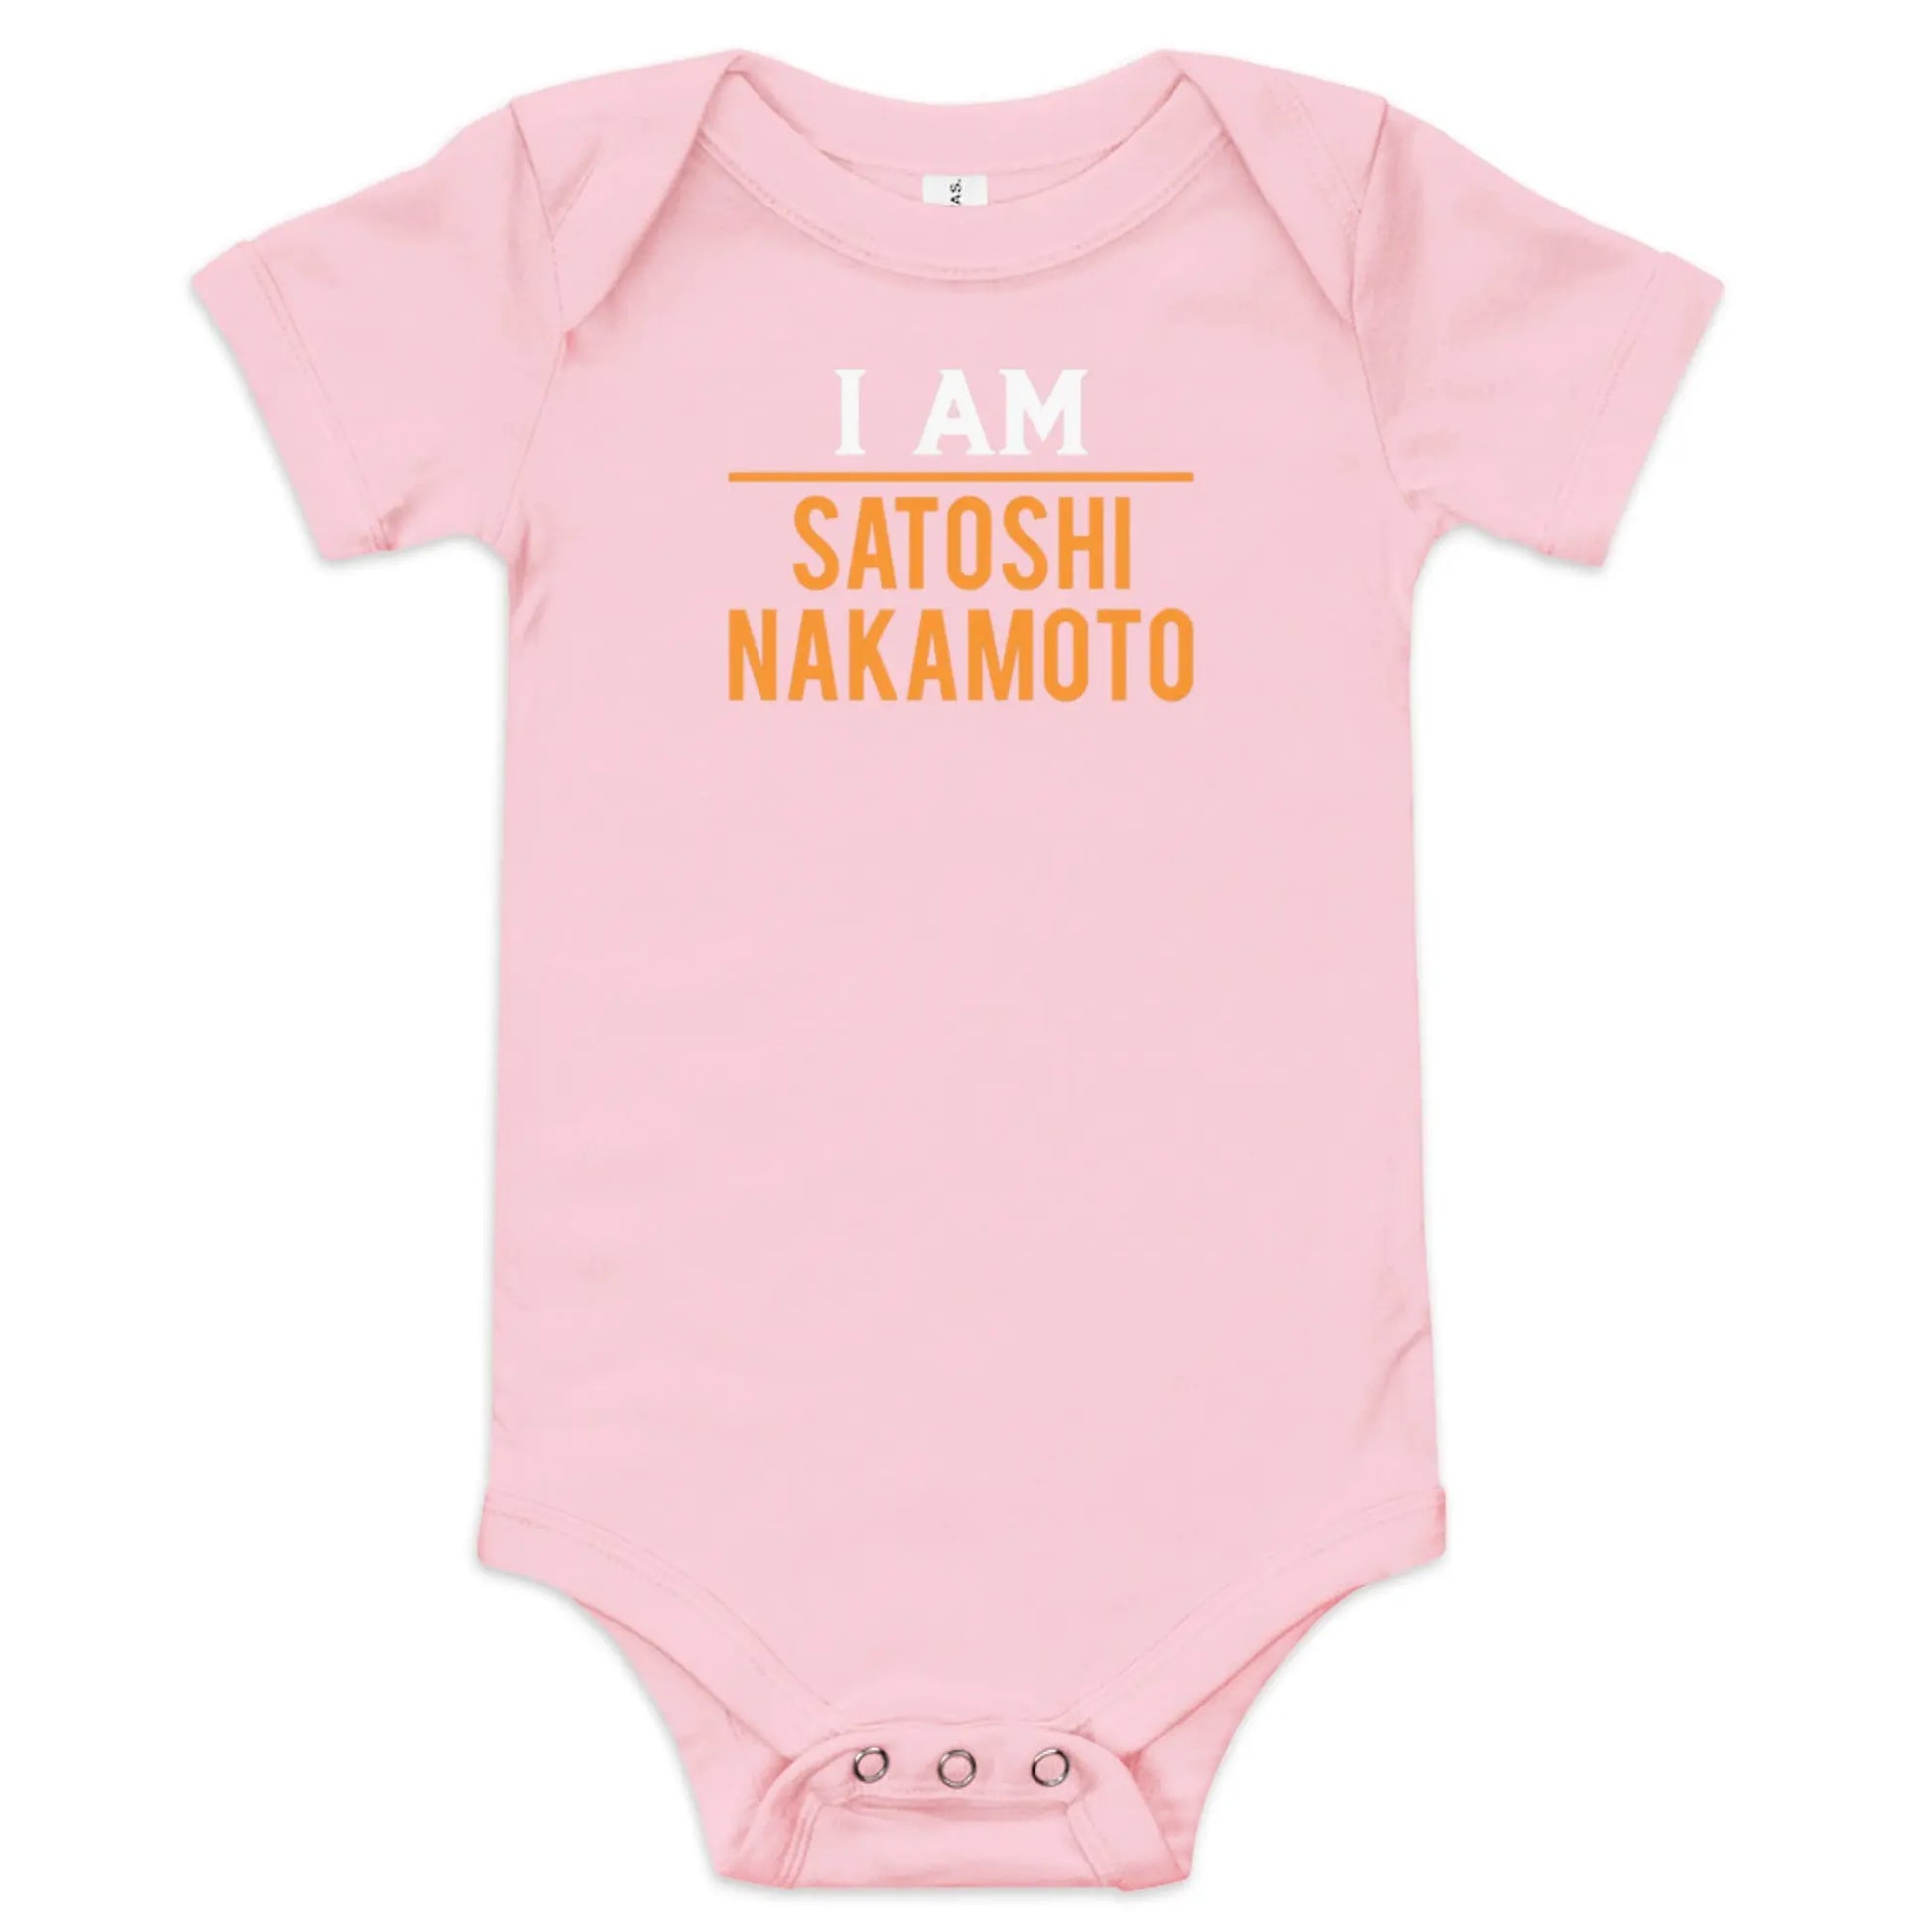 I AM Satoshi Nakamoto - Baby Bitcoin Body Suit - Store of Value